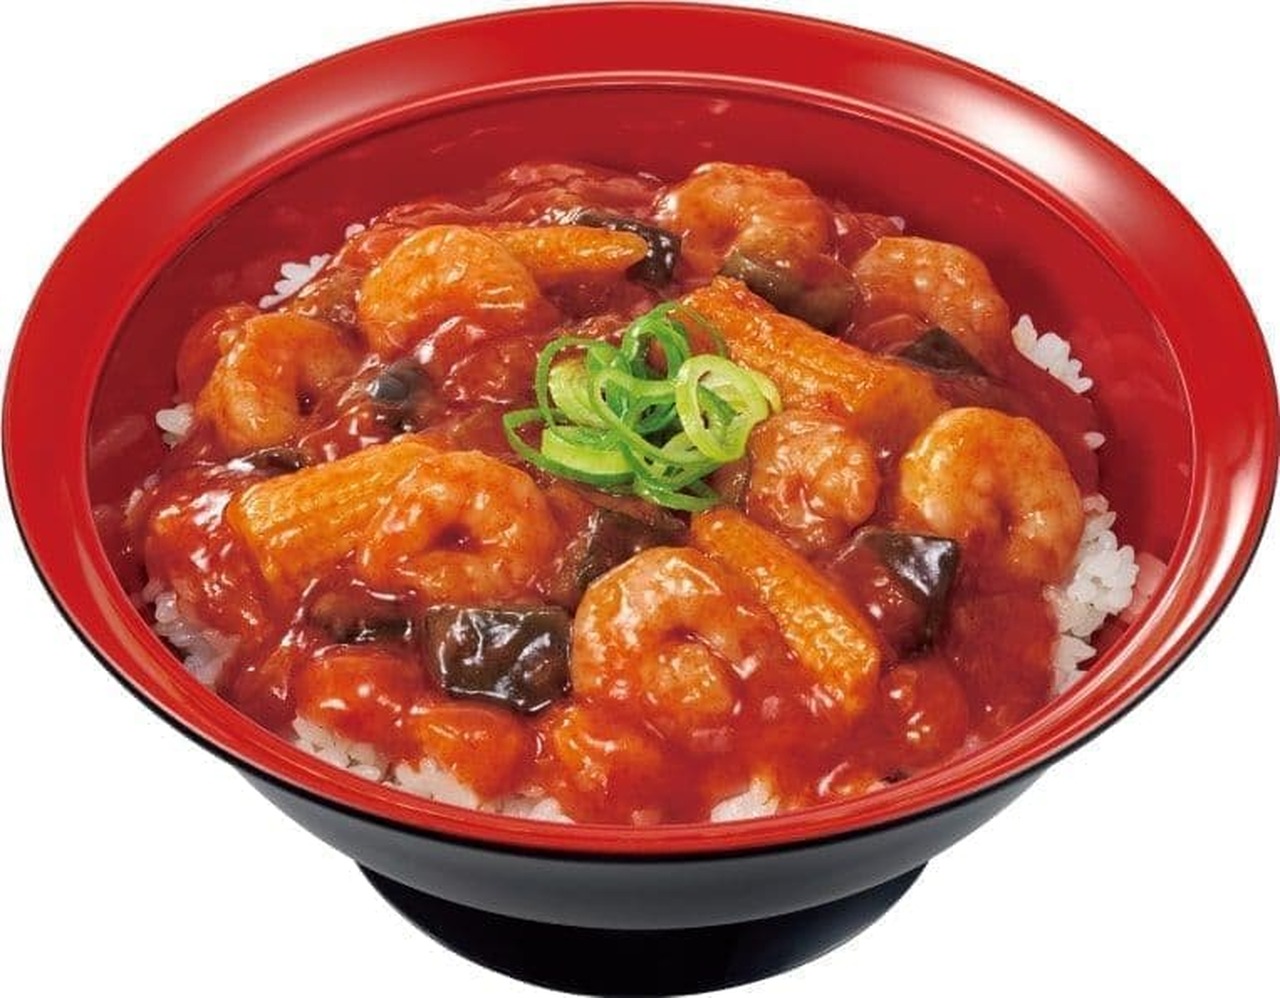 Sukiya "Shrimp chili bowl with plenty of ingredients"